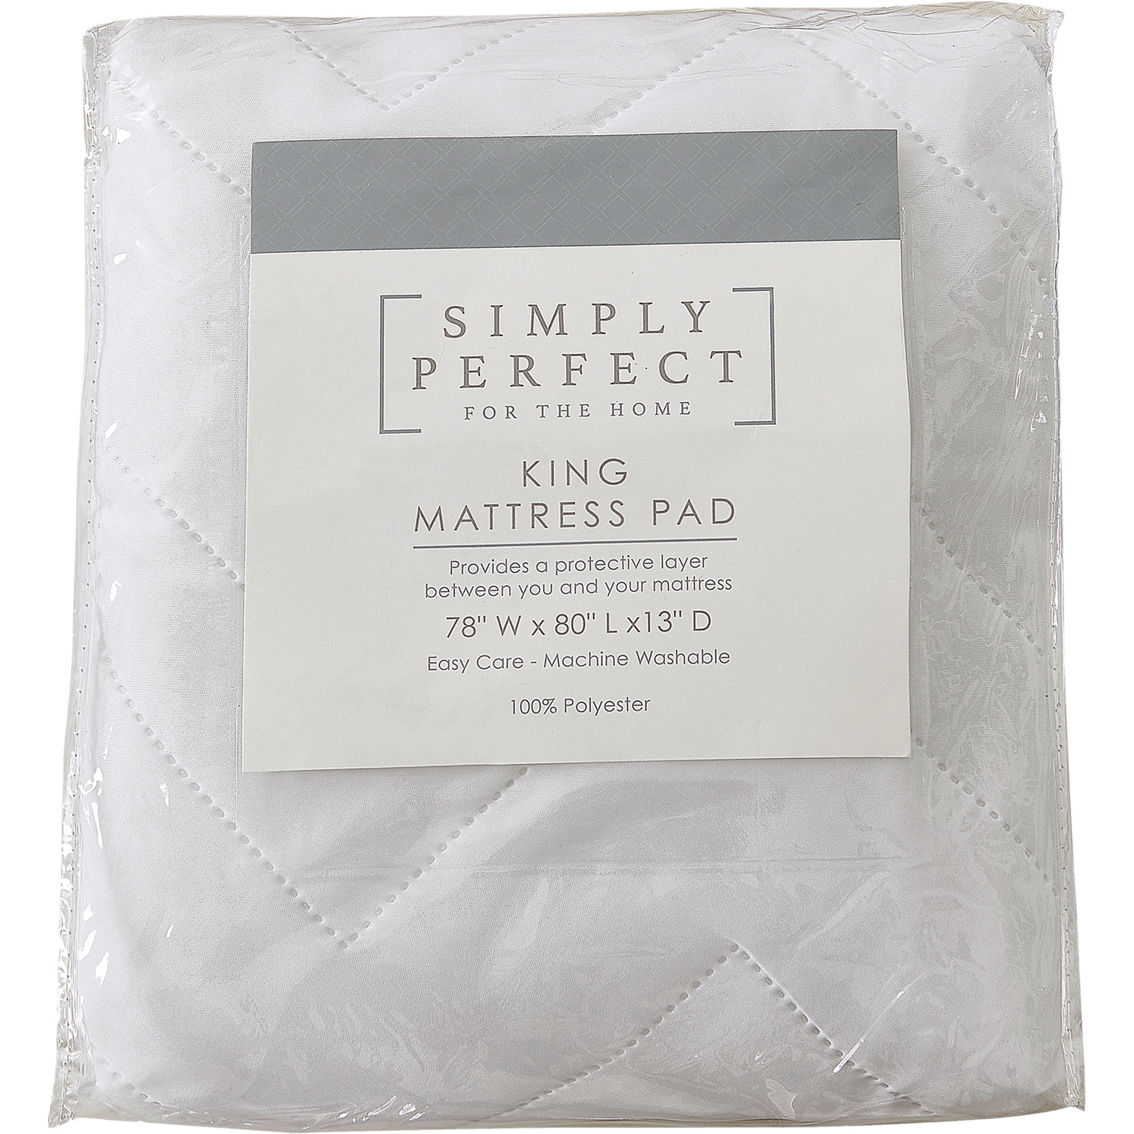 Simply Perfect Mattress Pad - Image 5 of 8